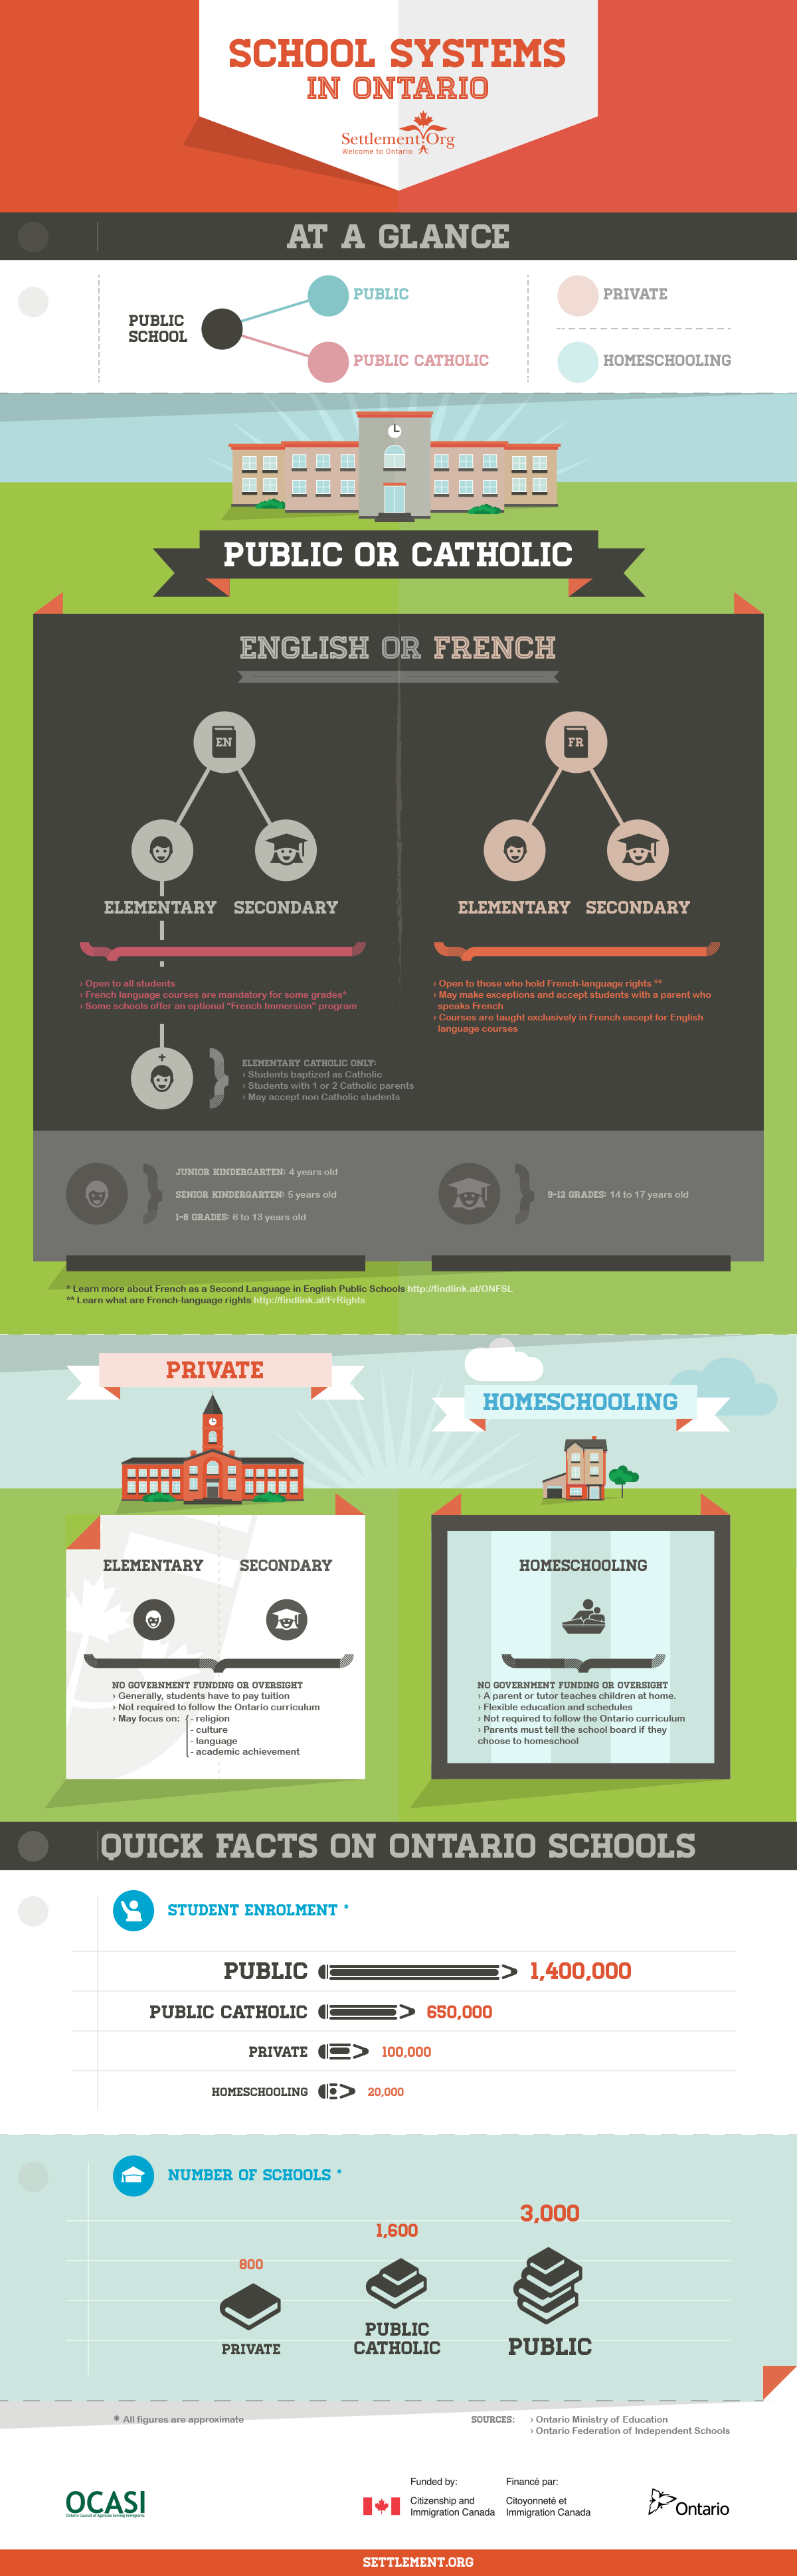 infographic-school-systems-ontario-big